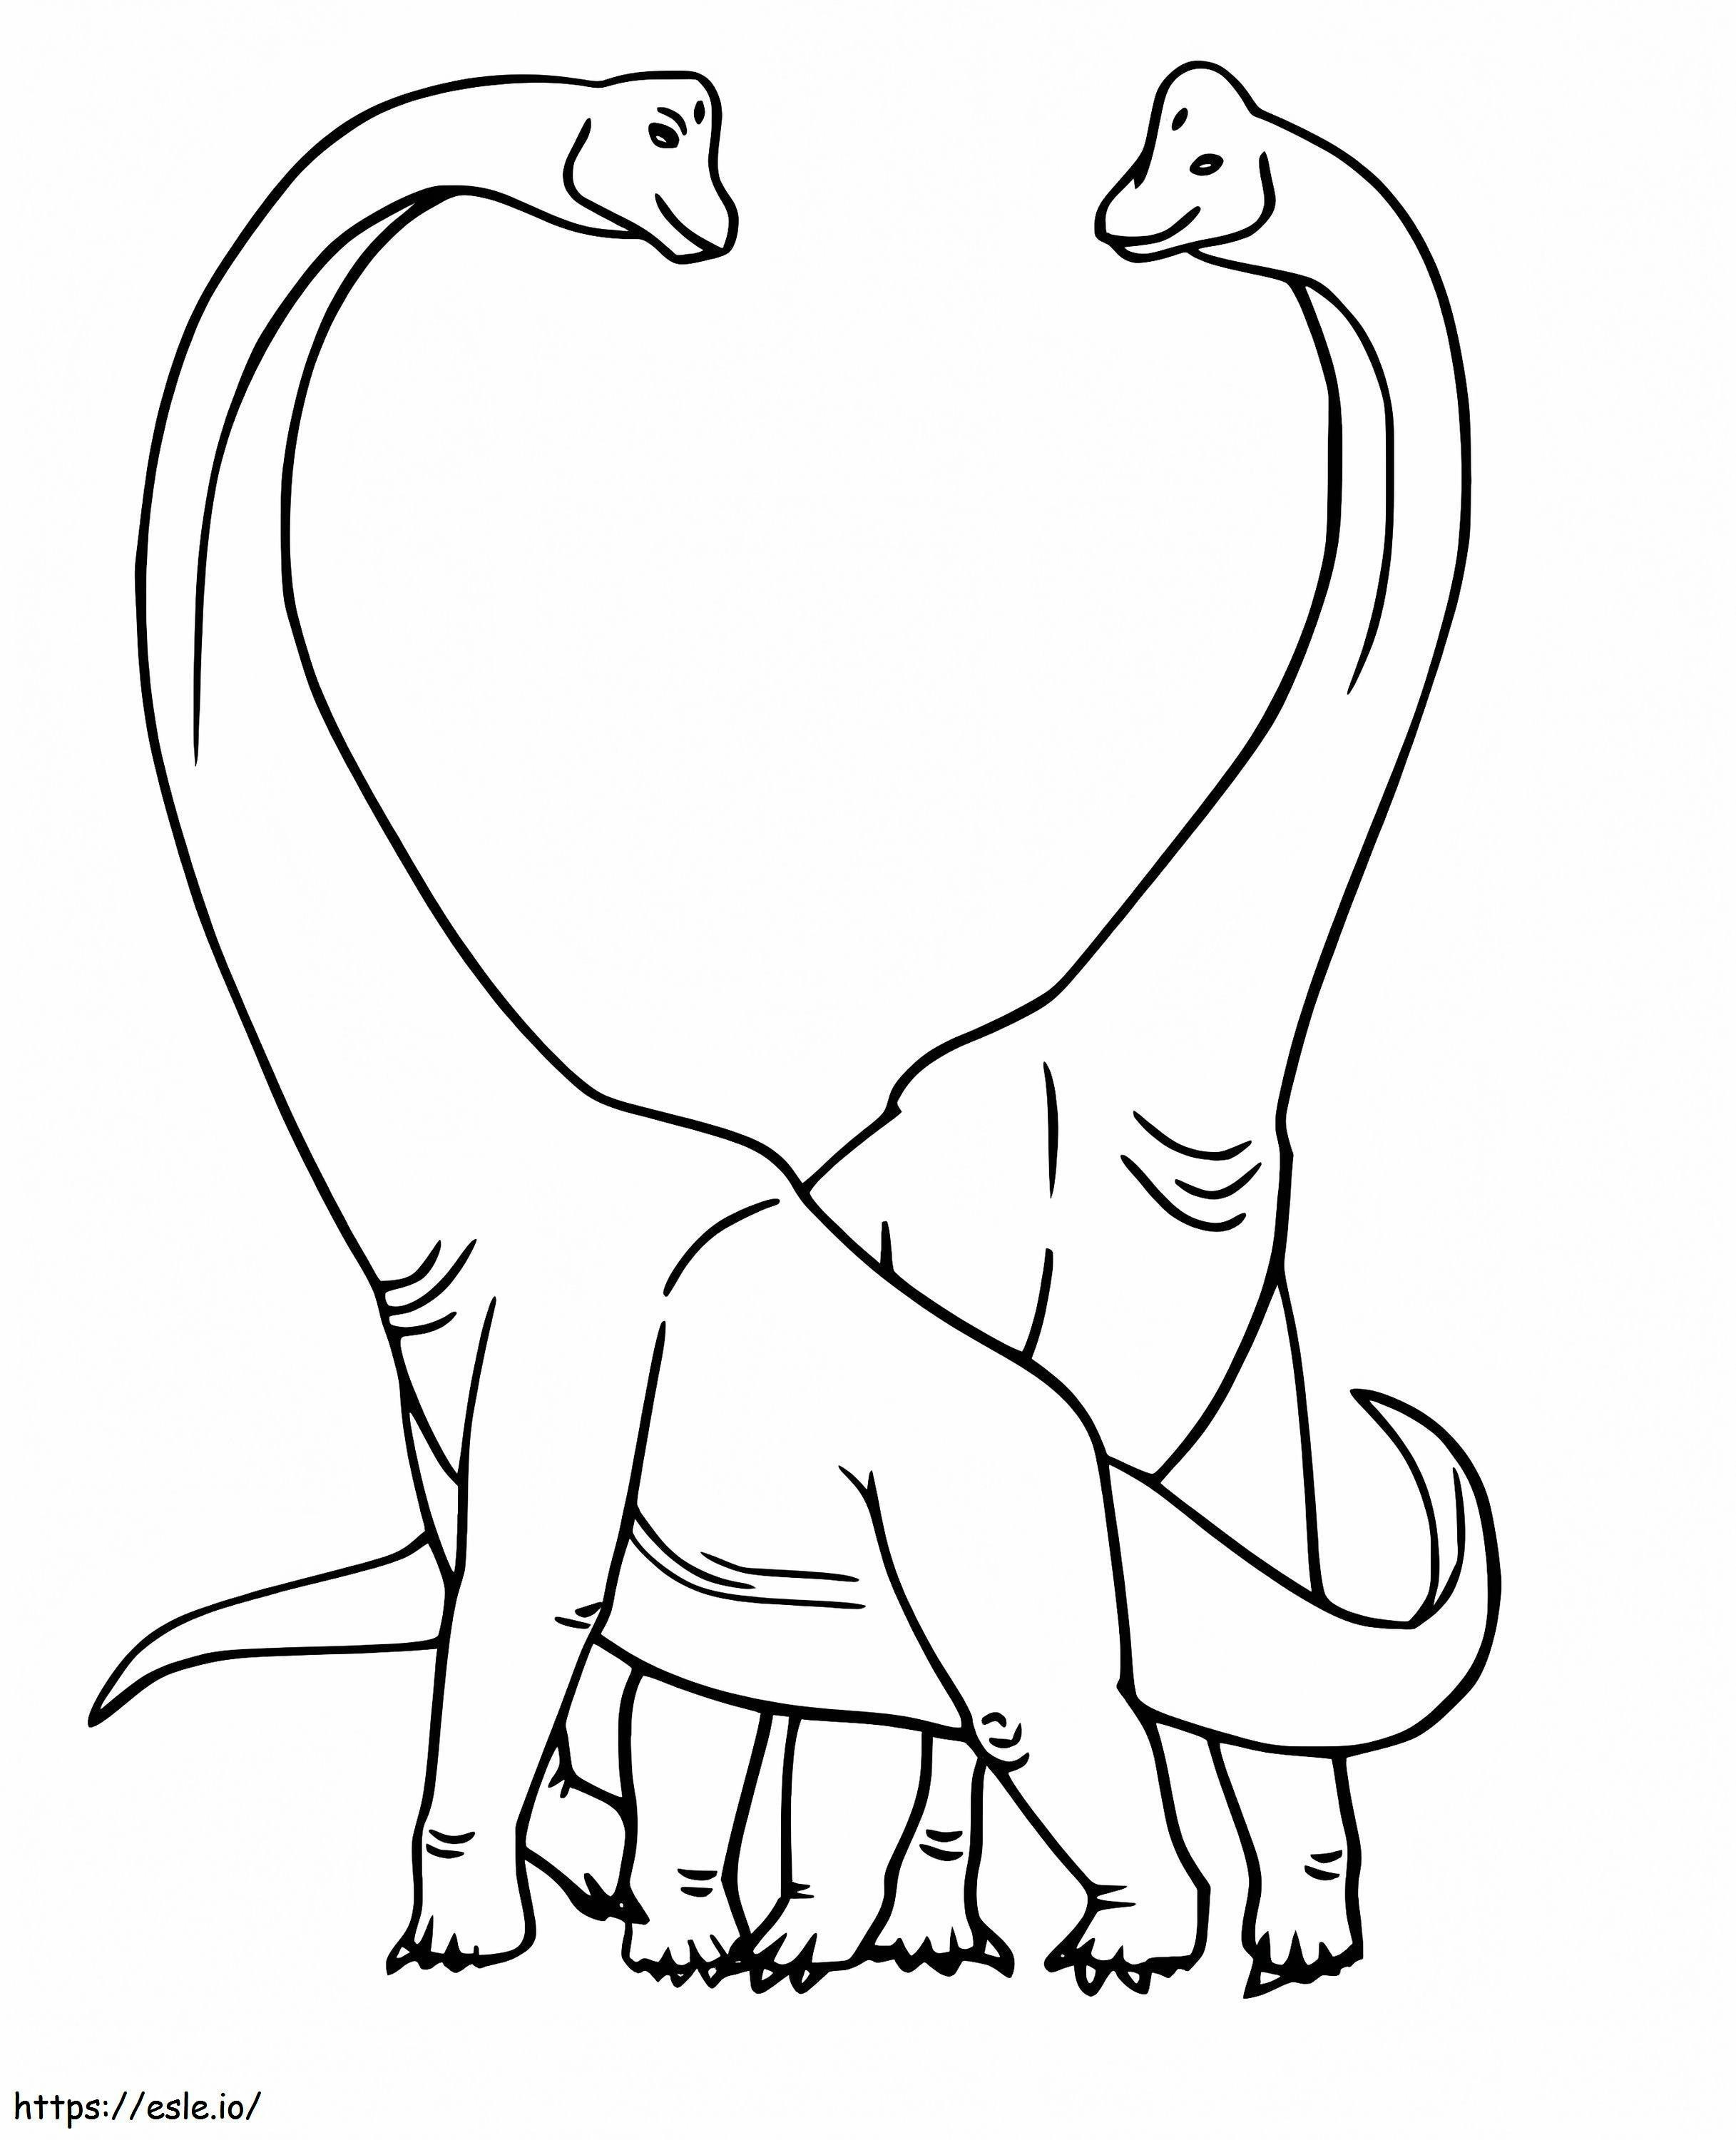 Brachiosaurus 9 coloring page